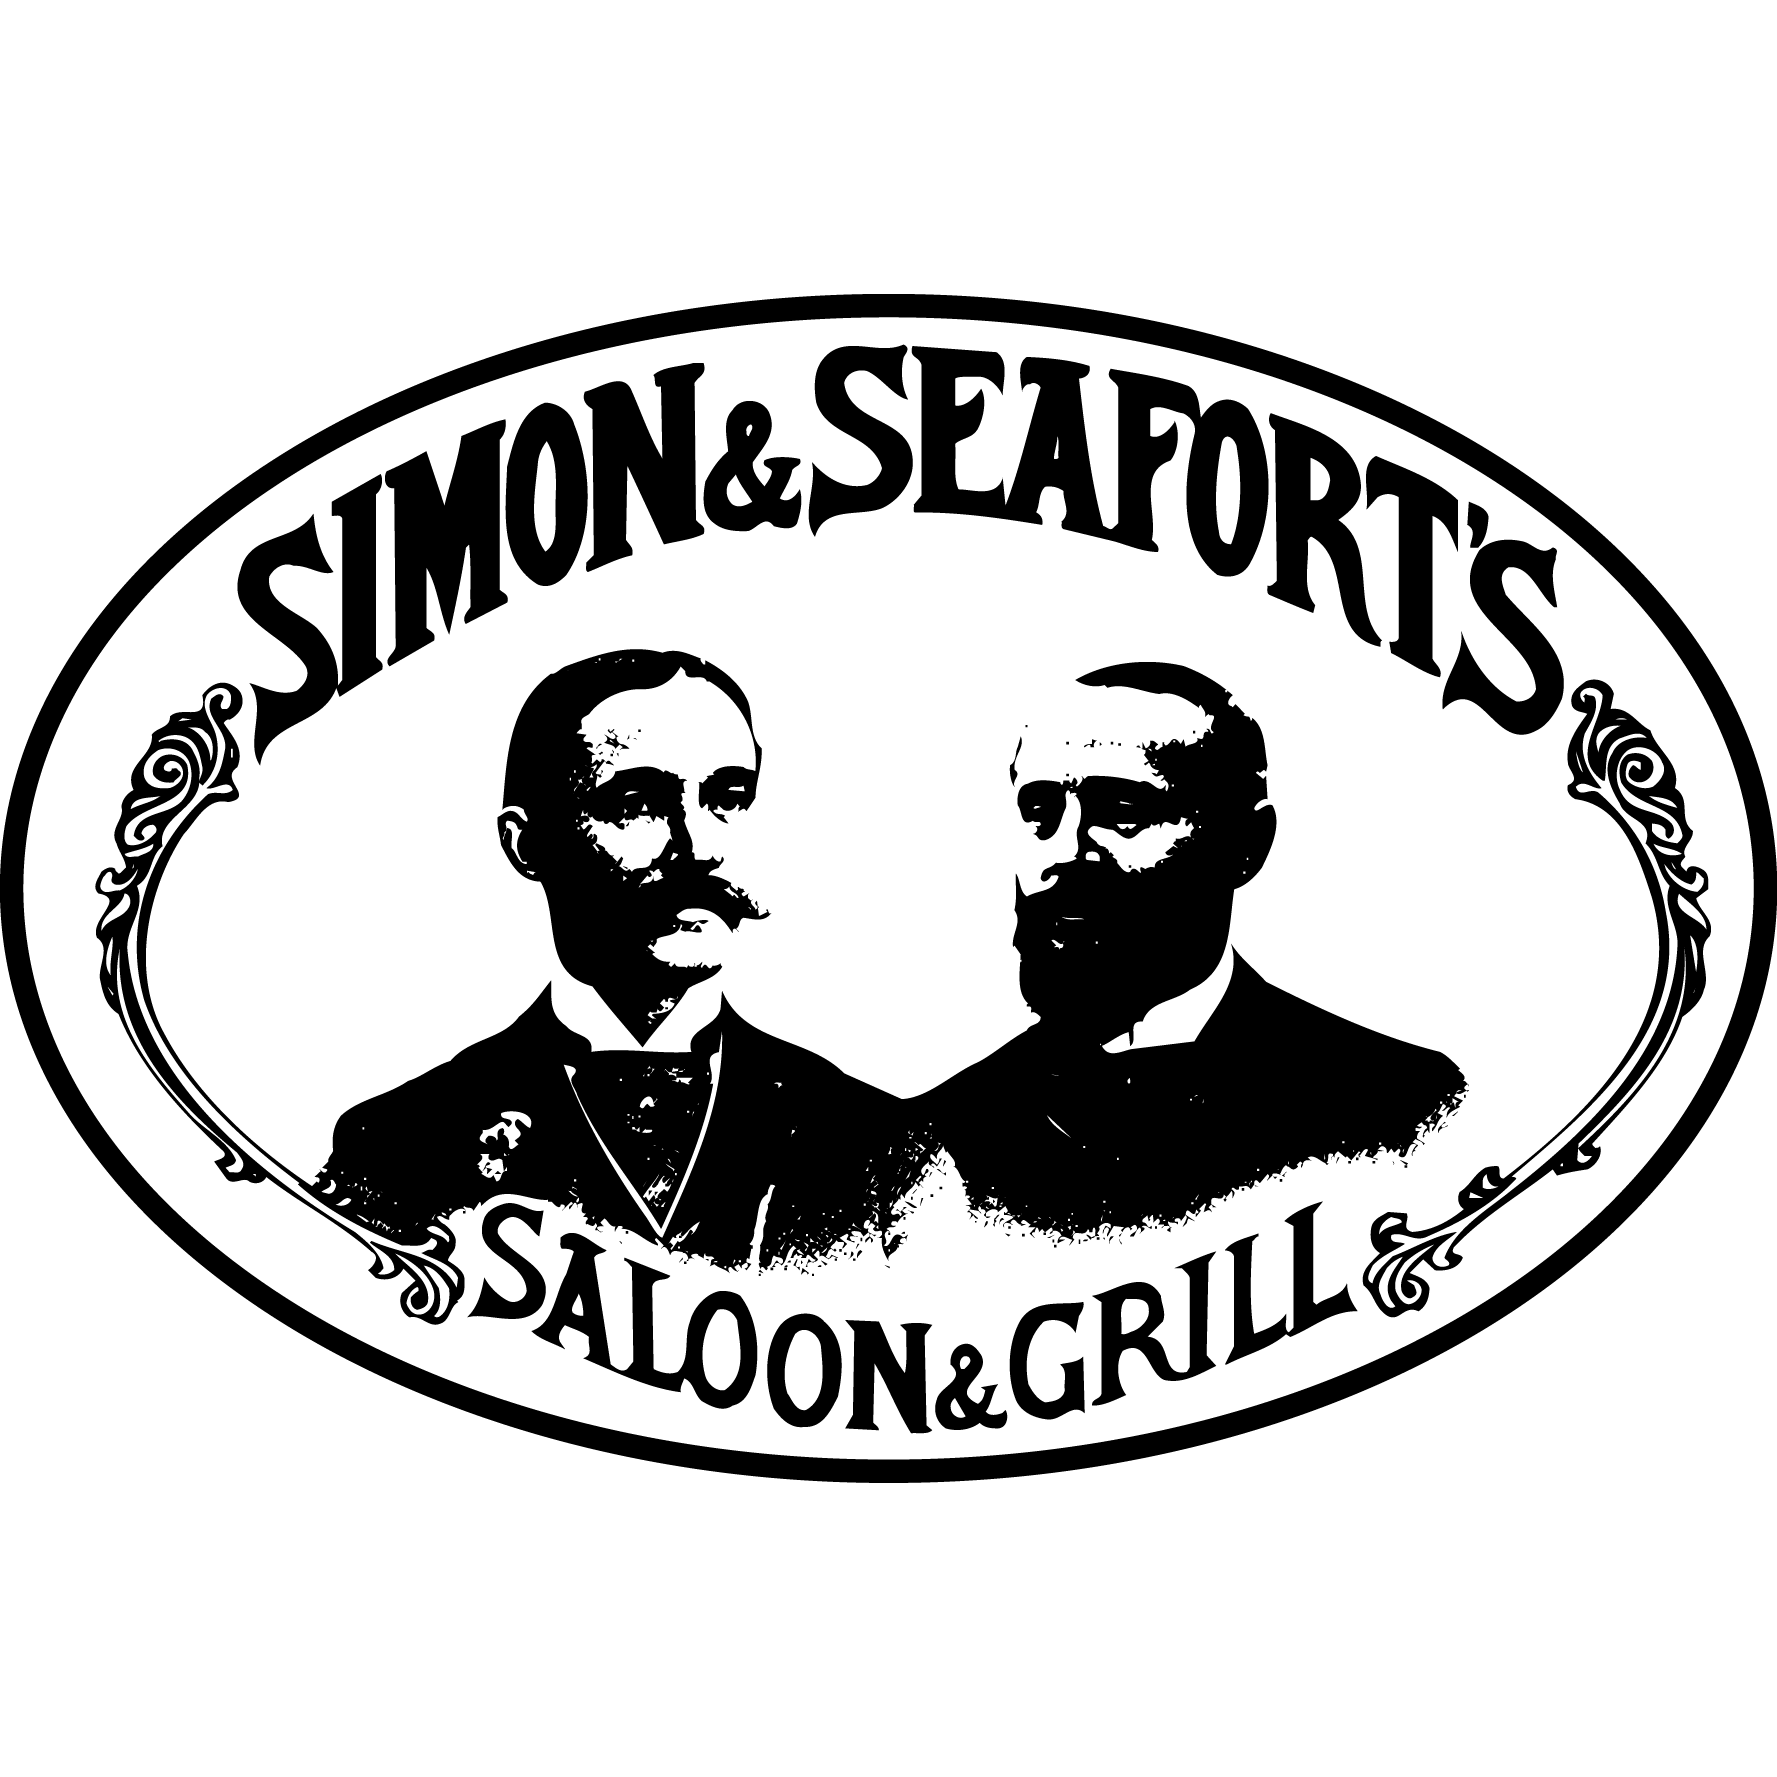 Simon & Seafort's Saloon & Grill Logo